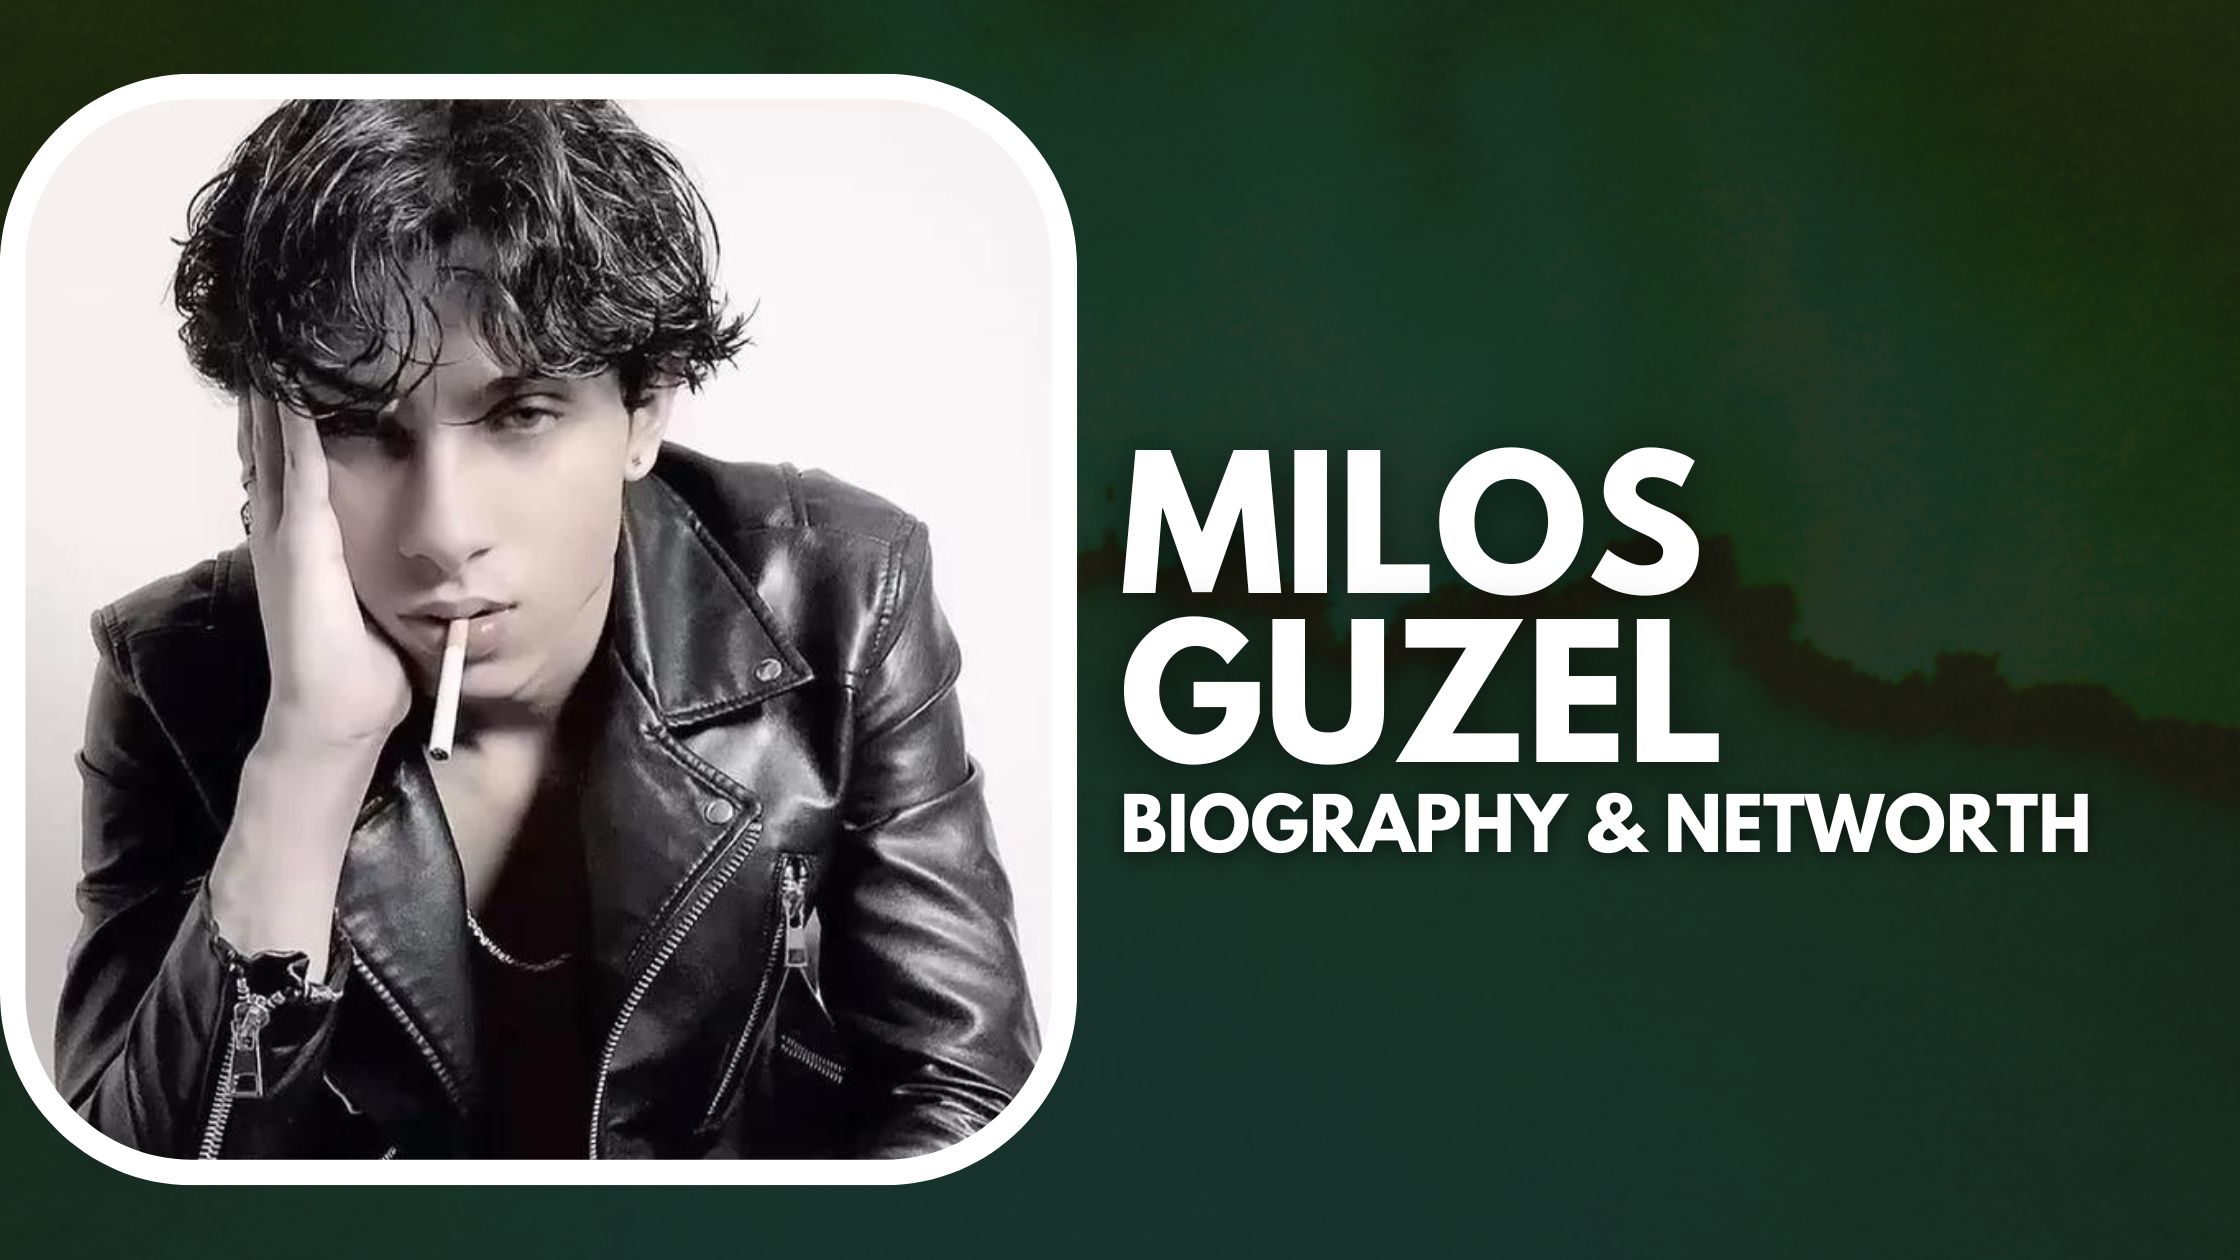 Milos Guzel biography & Net worth